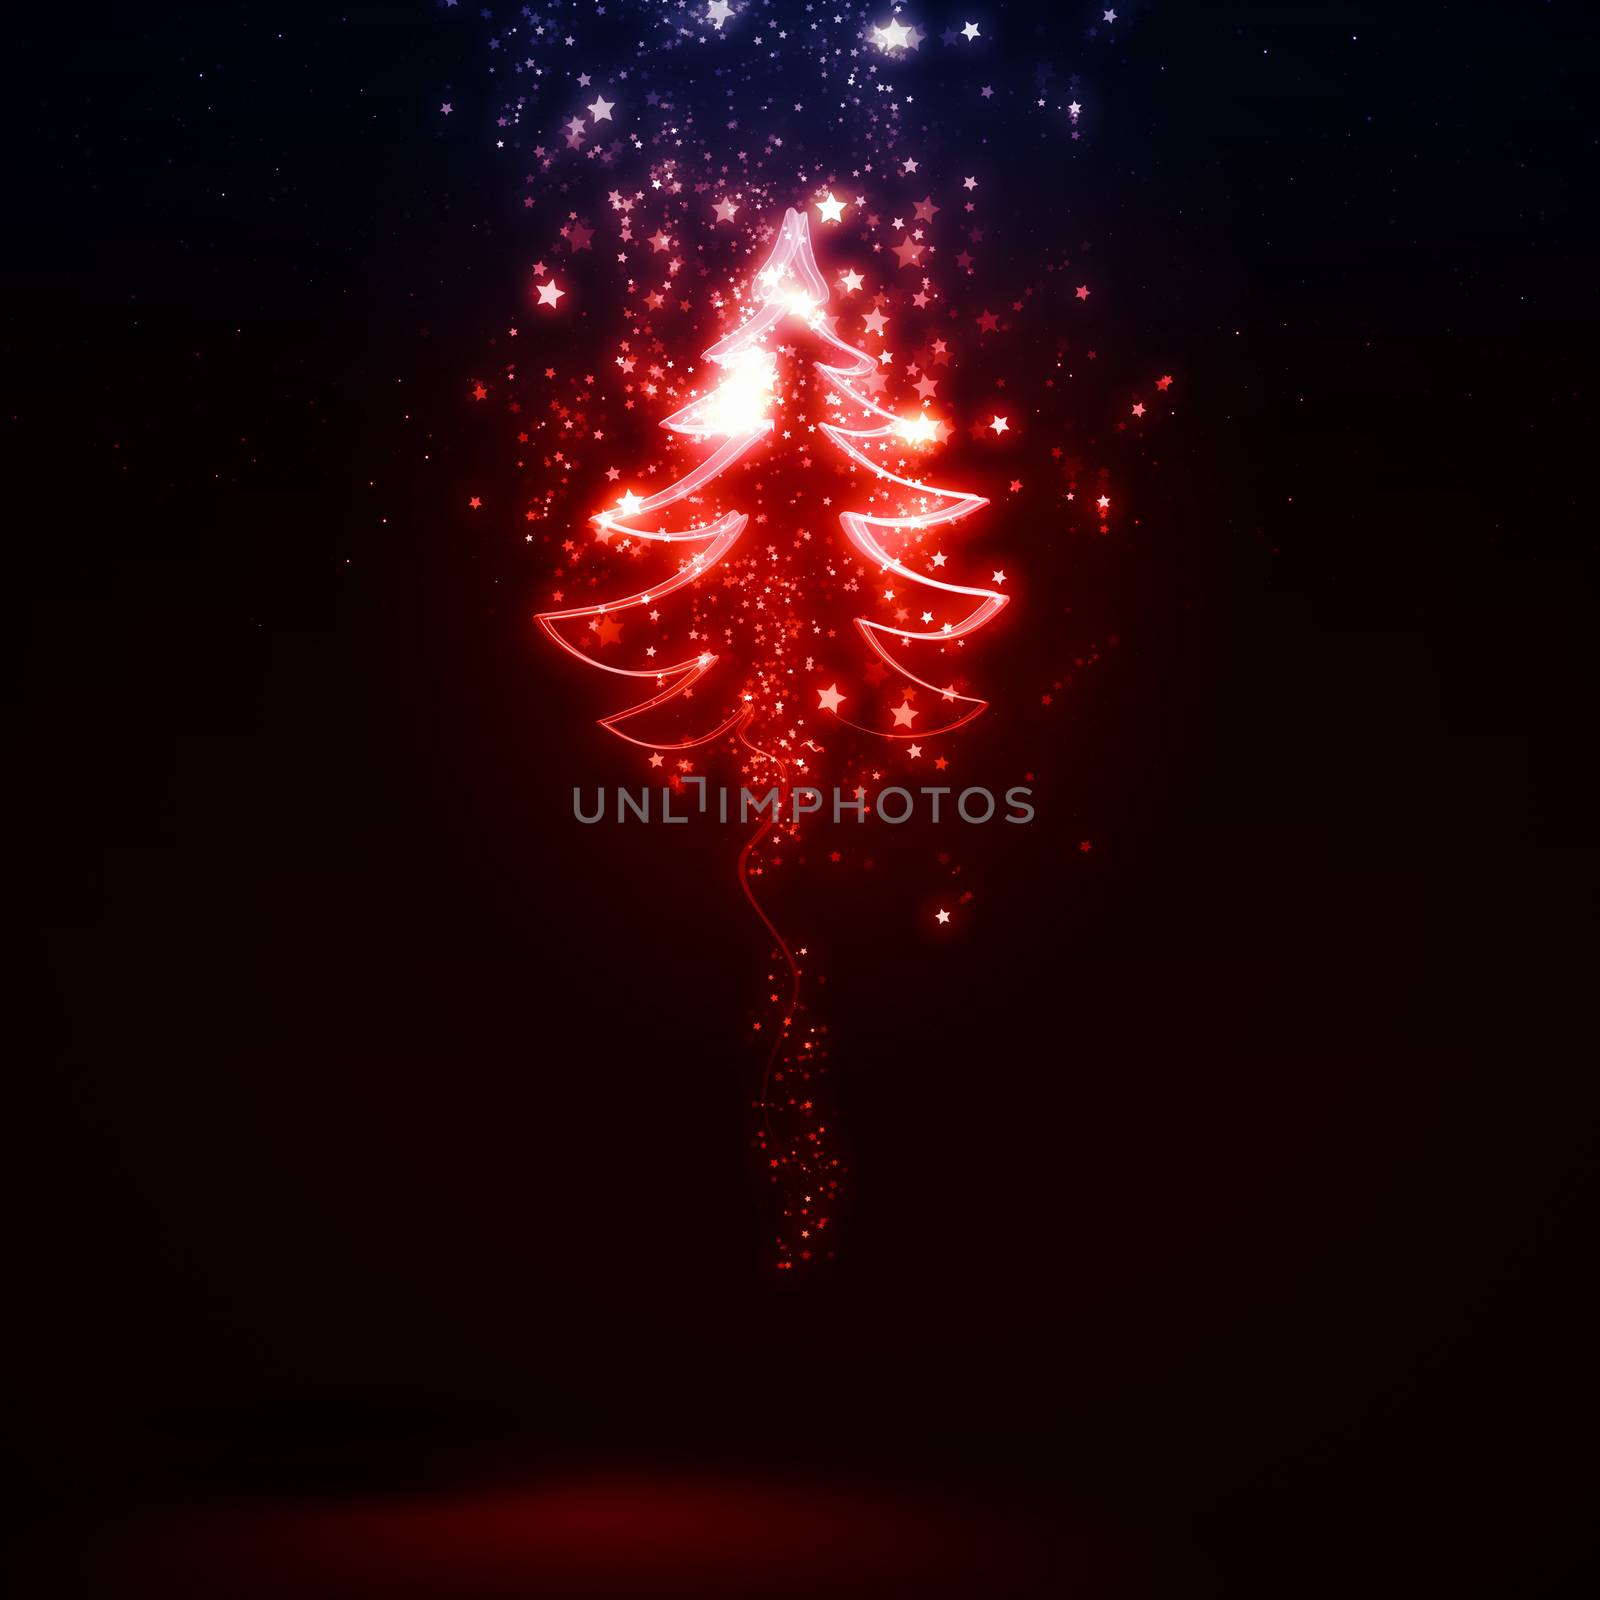 Background image of Christmas tree against dark background